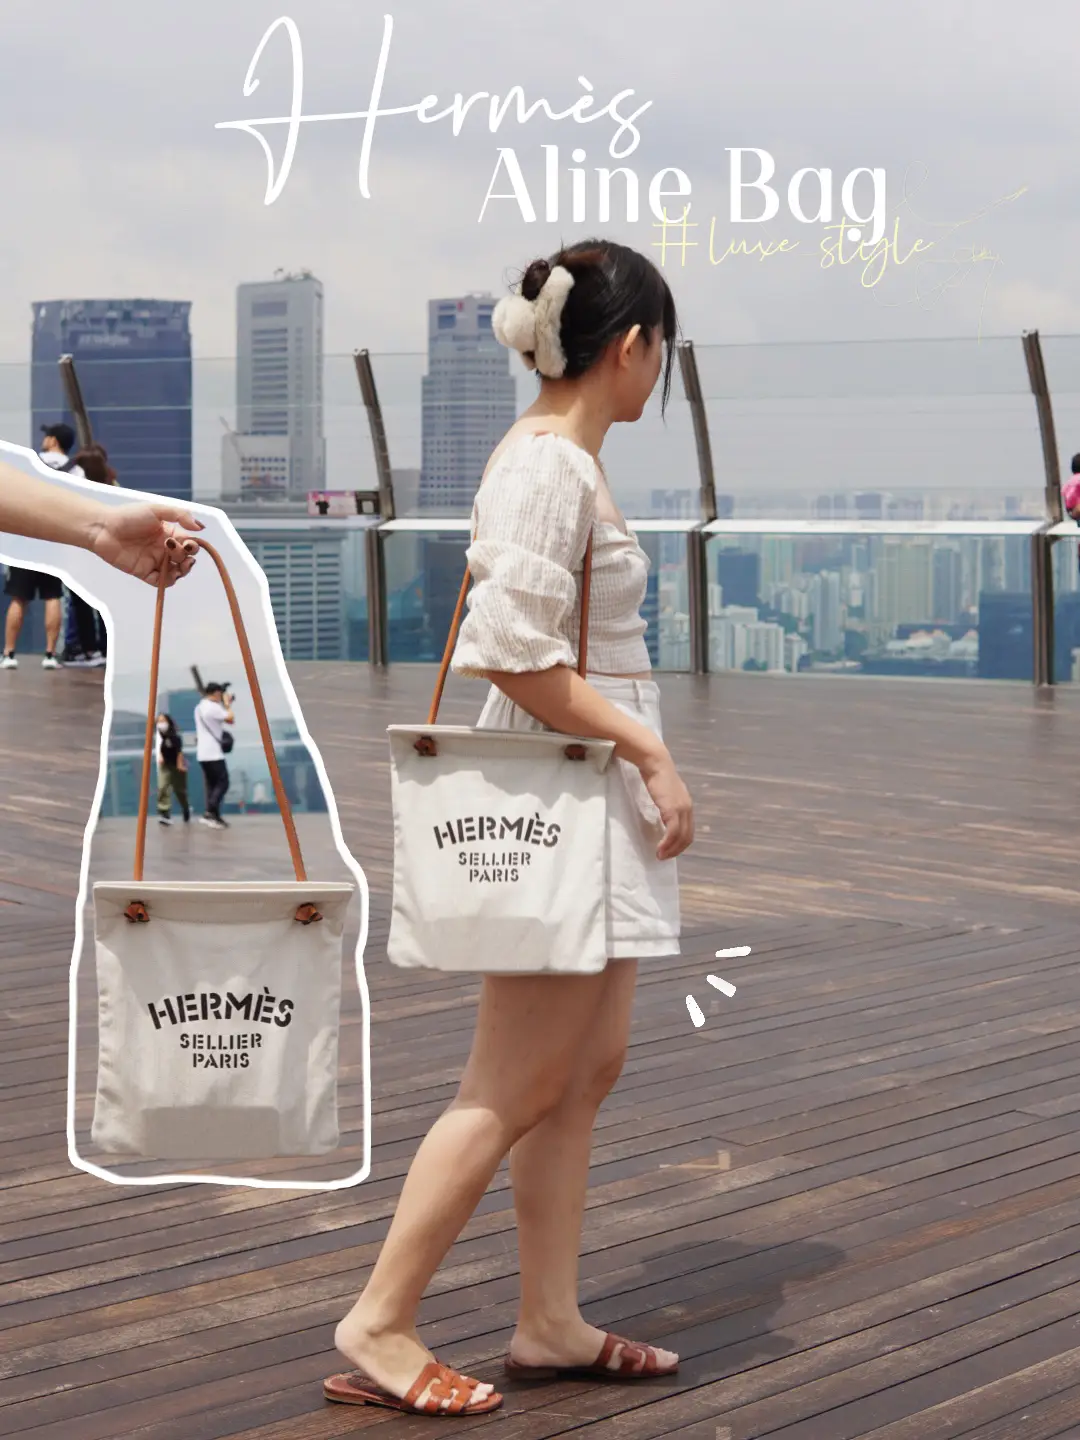 hermes tote bags - Buy hermes tote bags at Best Price in Malaysia